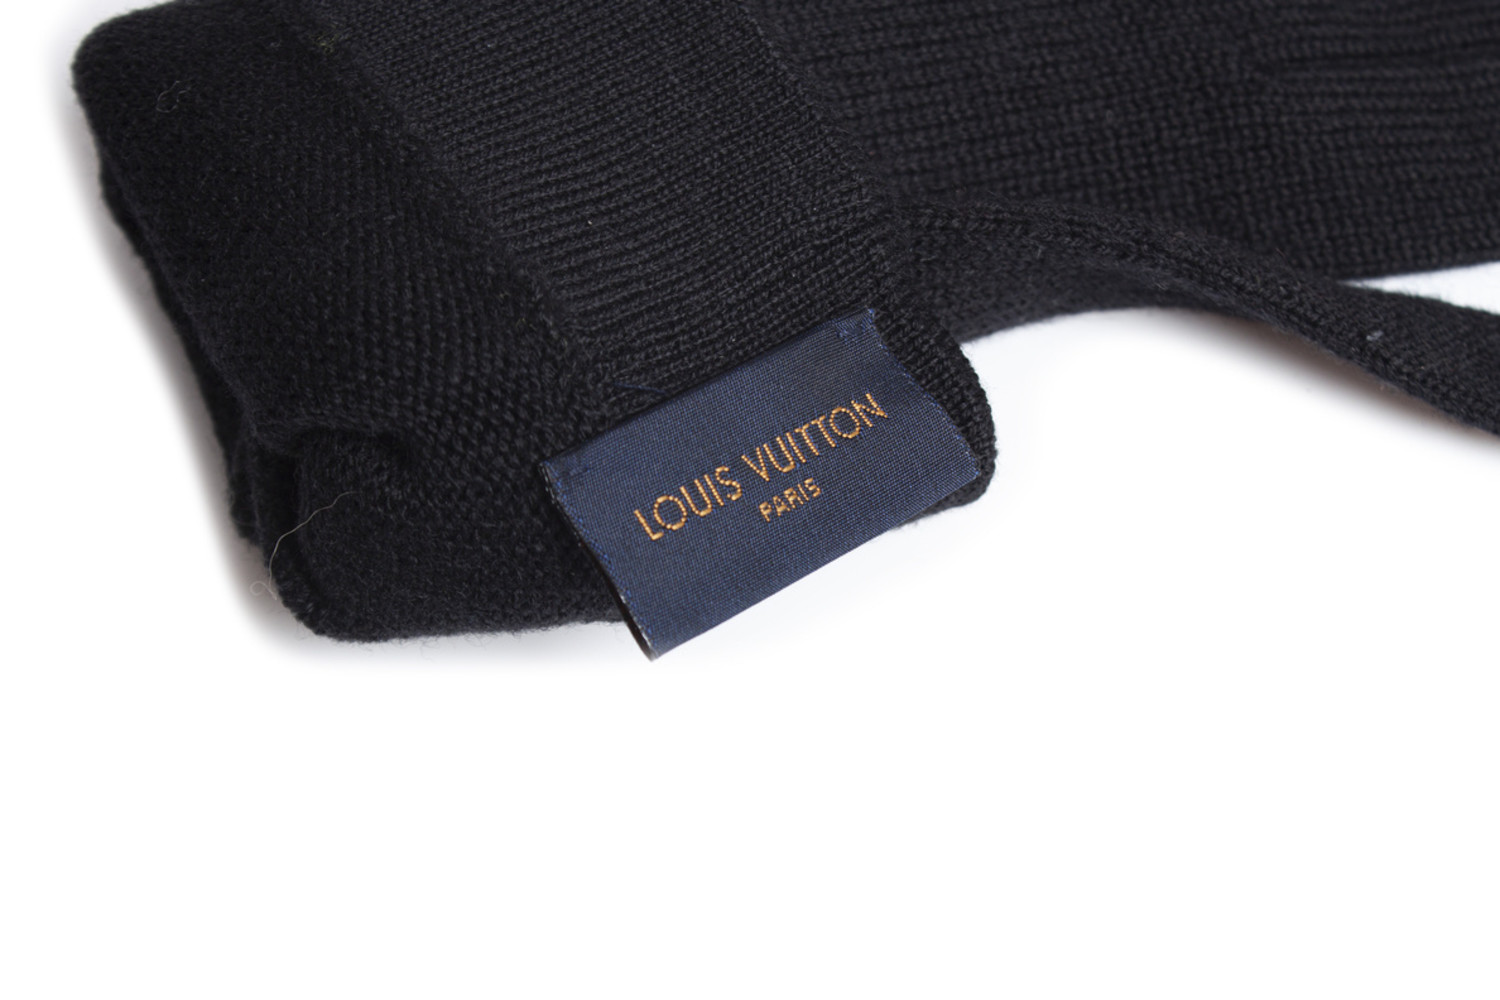 Louis Vuitton Gloves Rose Knitted Glove Monogram Extravagant -  UK